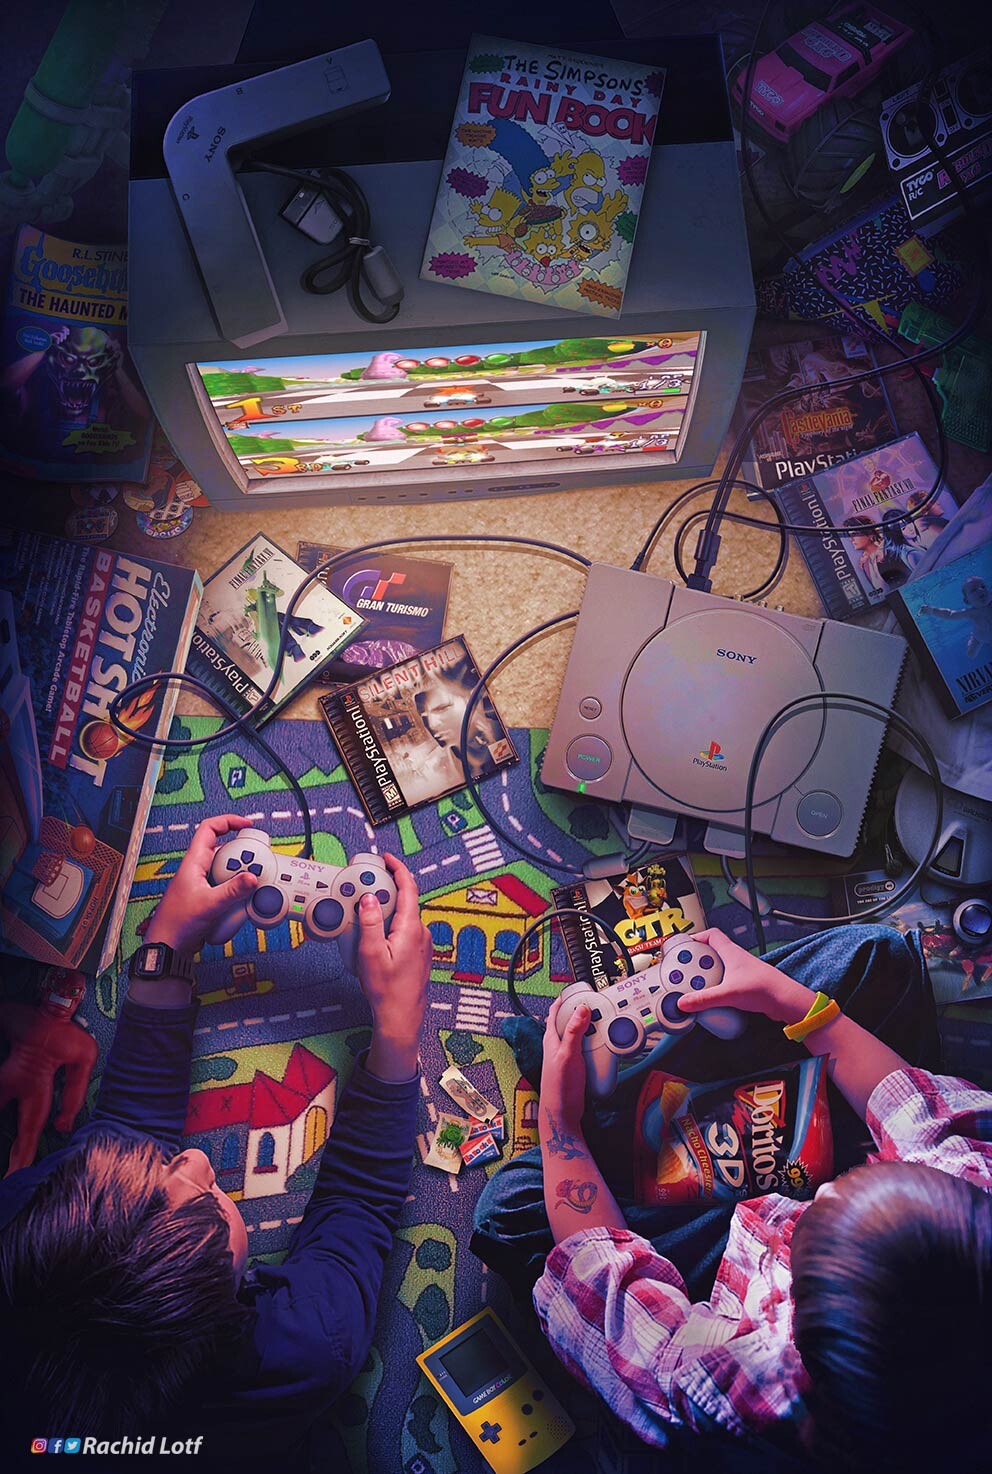 ArtStation - Playstation 1 - Crash Team Racing ( 90s childhood room ), Rachid Lotf